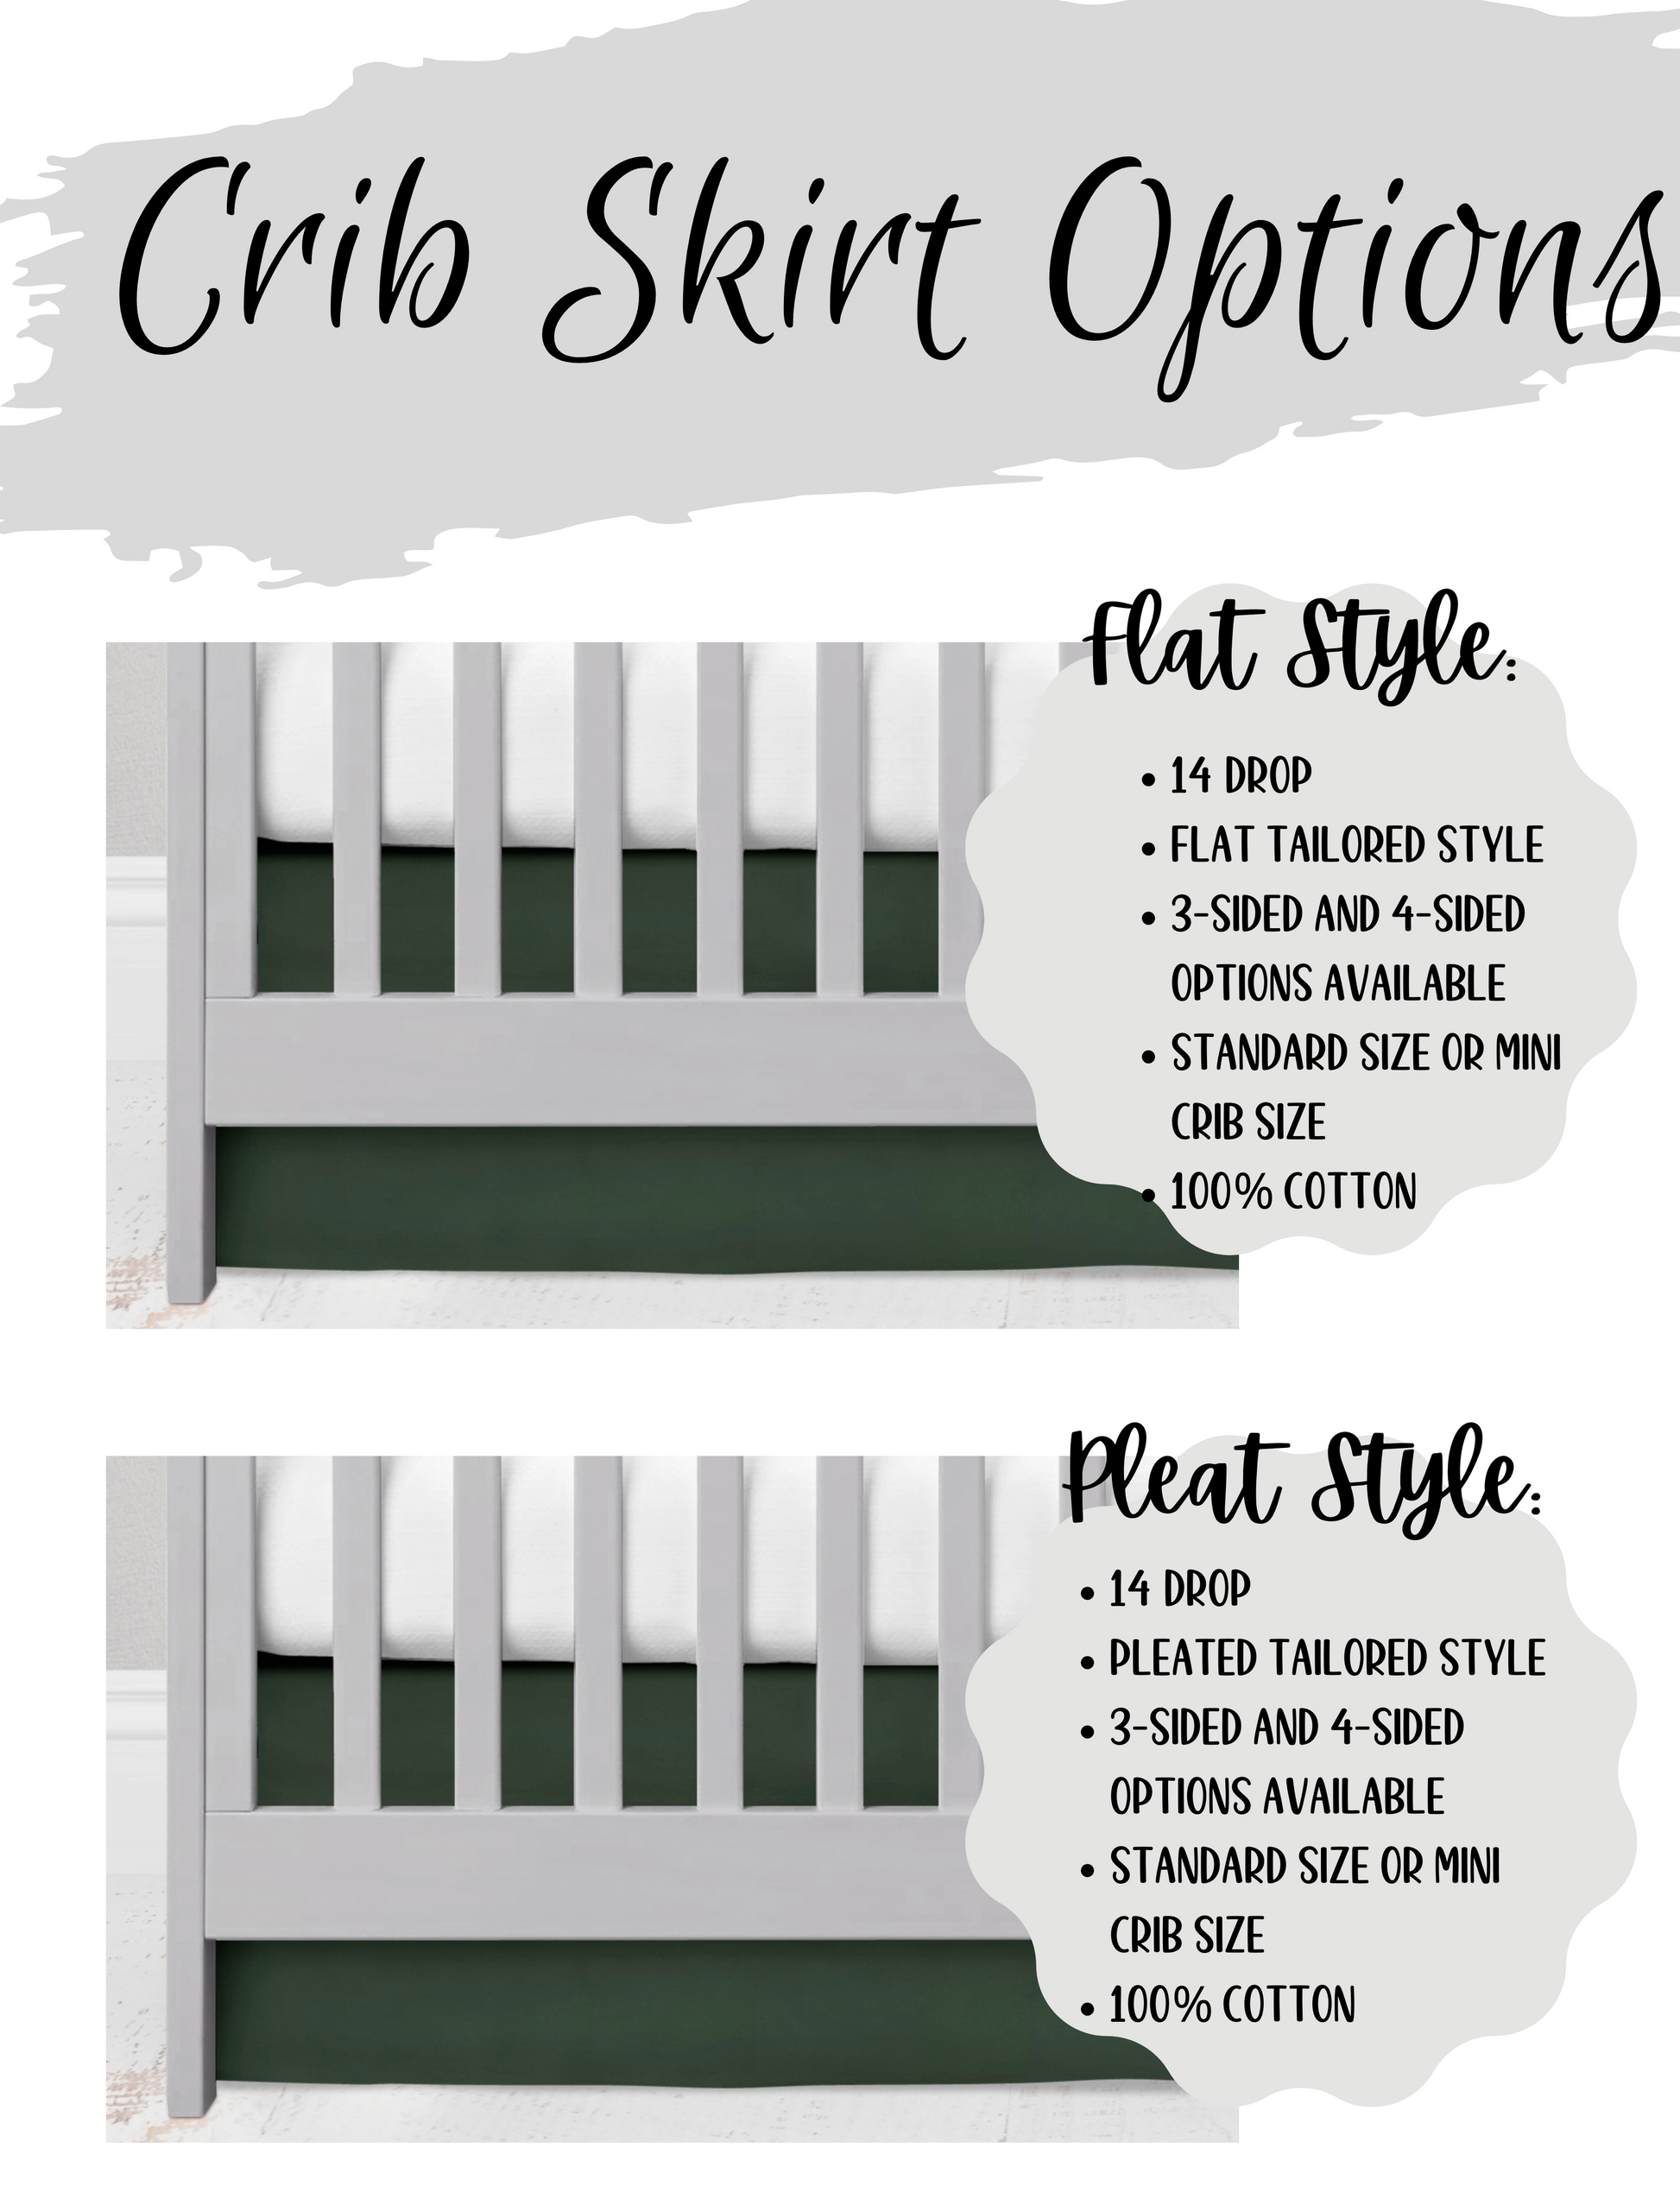 crib skirt options - flat or pleat